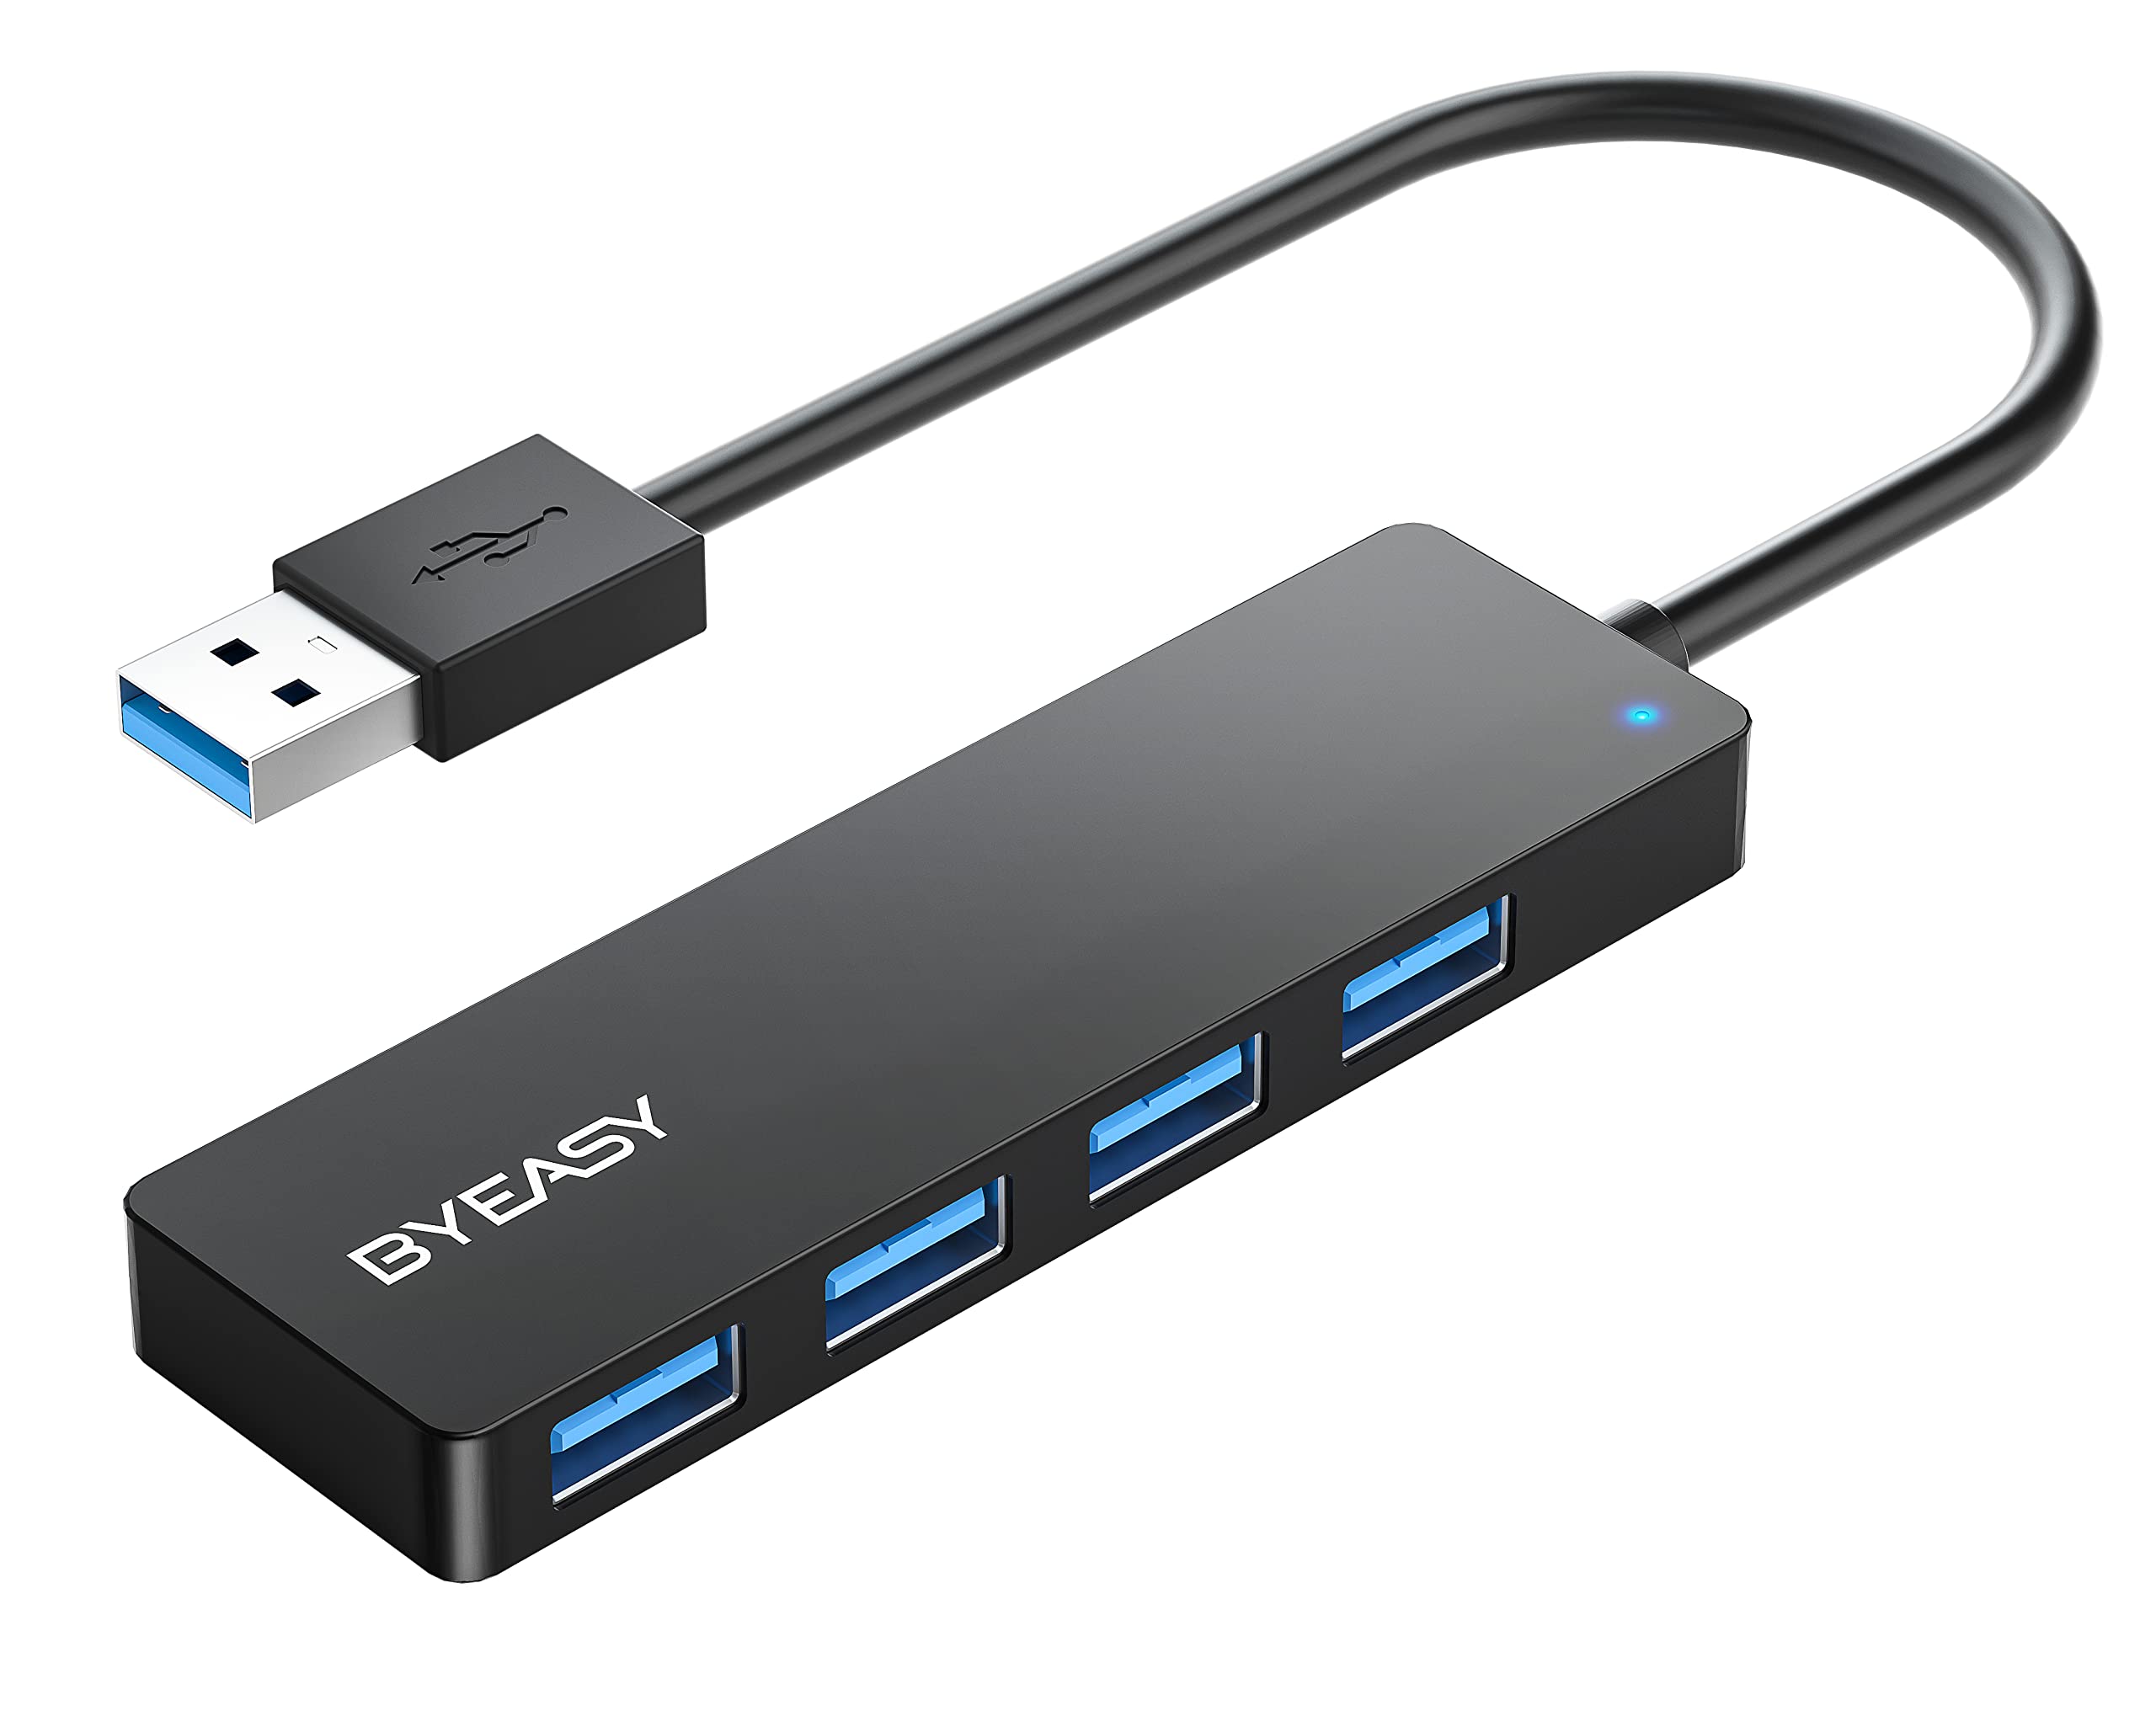 BYEASY USB Hub,USB Splitter for Laptop,Multiport USB 30 Hub,Multi USB Port Expander,Fast Data Transfer 4 Port USB Hub compatible